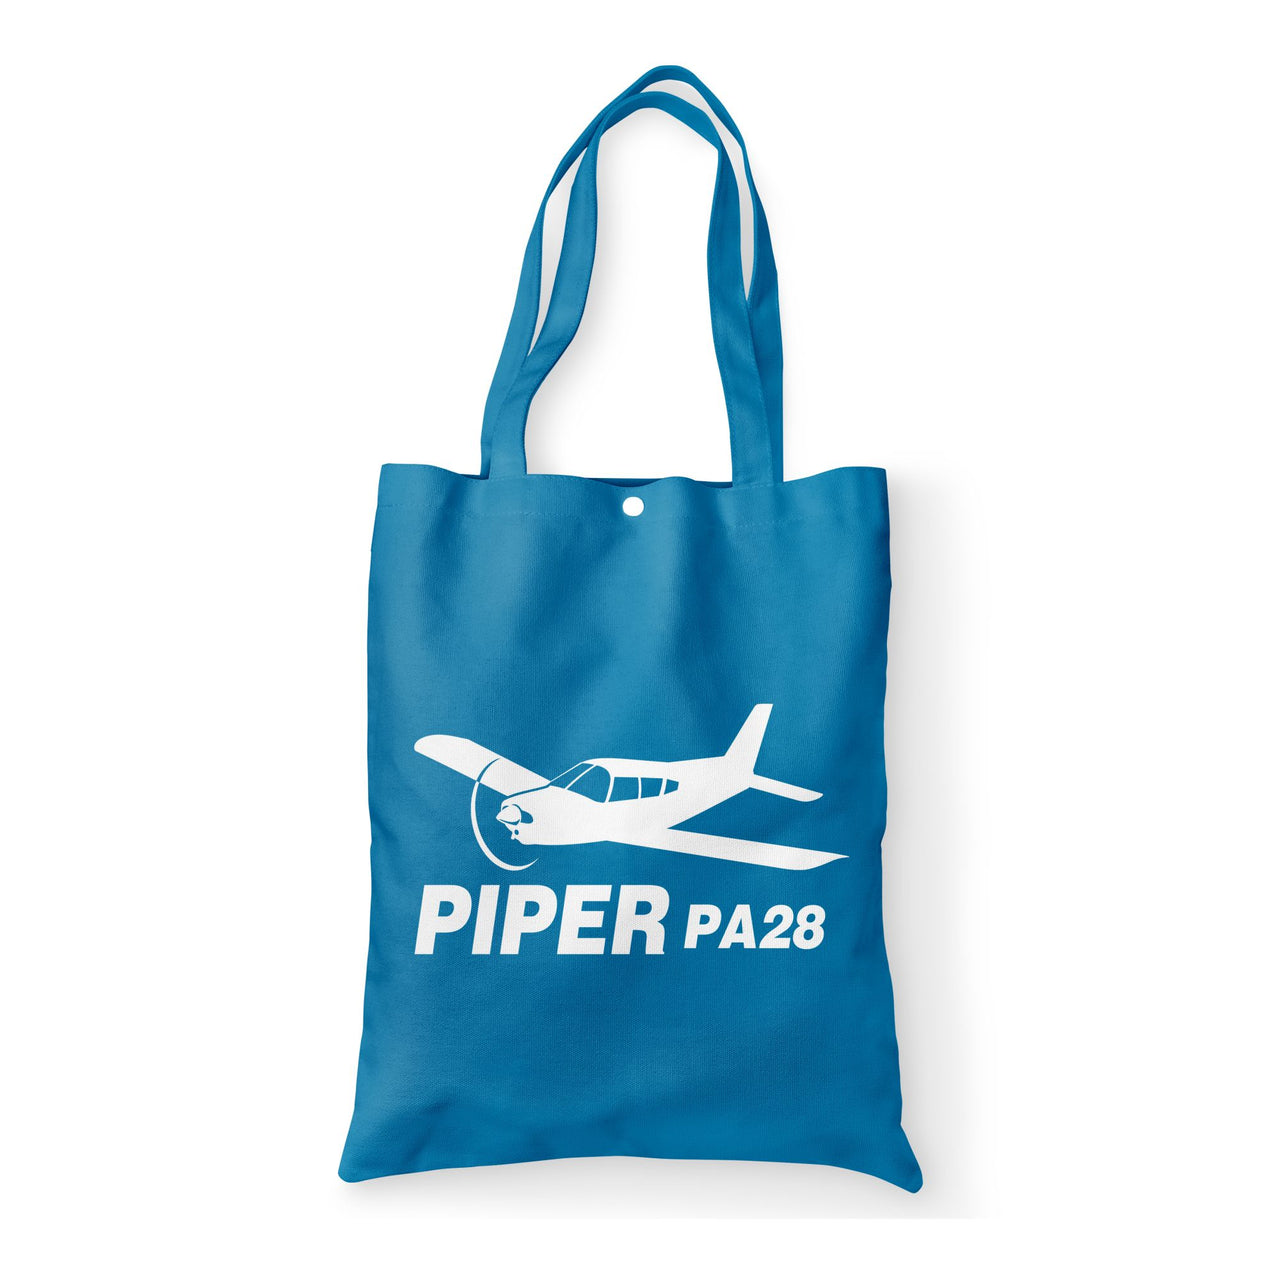 The Piper PA28 Designed Tote Bags